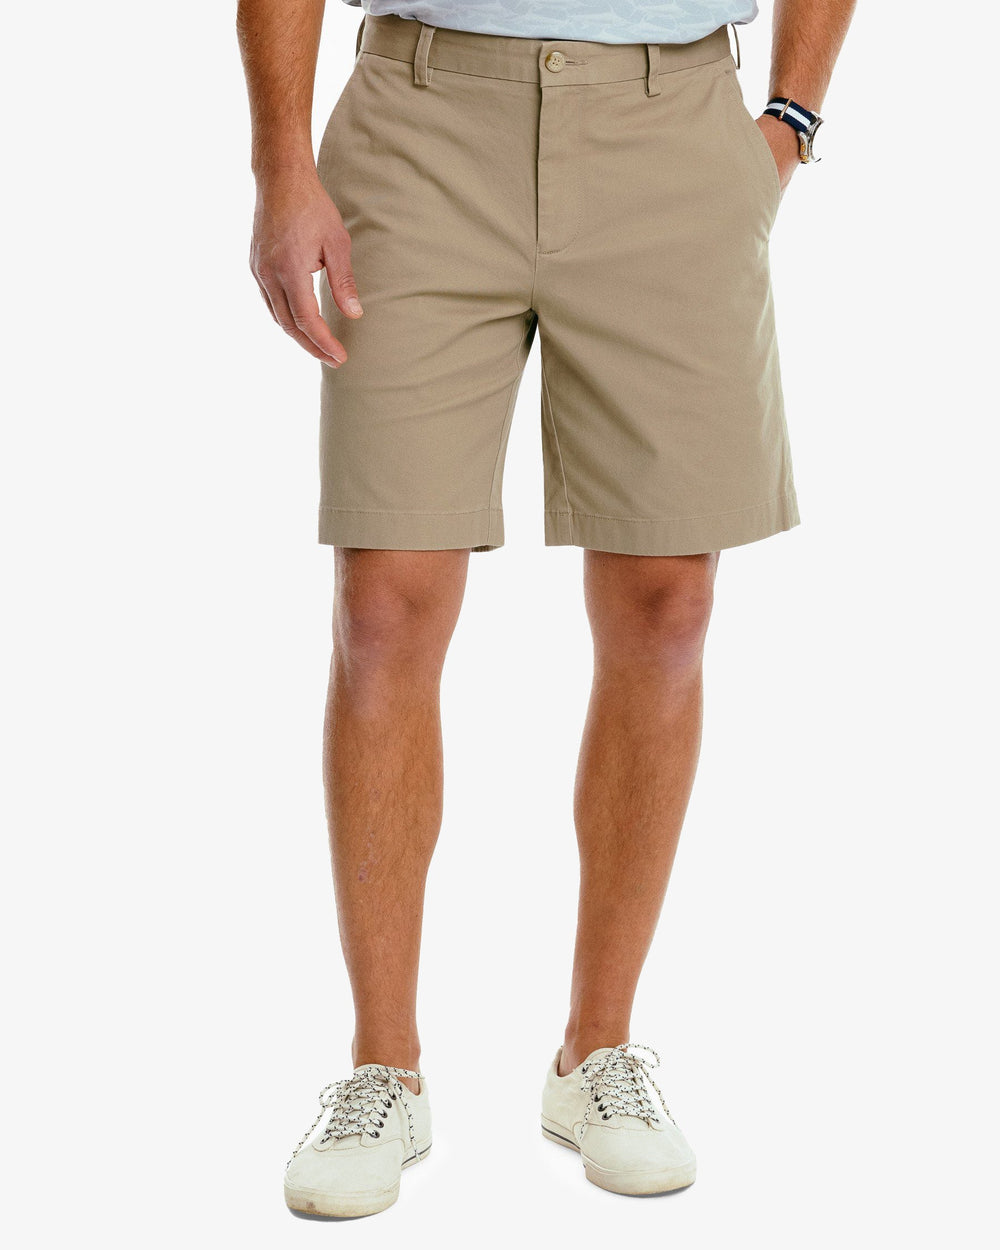 Men's 9 Inch Khaki Shorts - Lightweight stretch fabric | Southern Tide